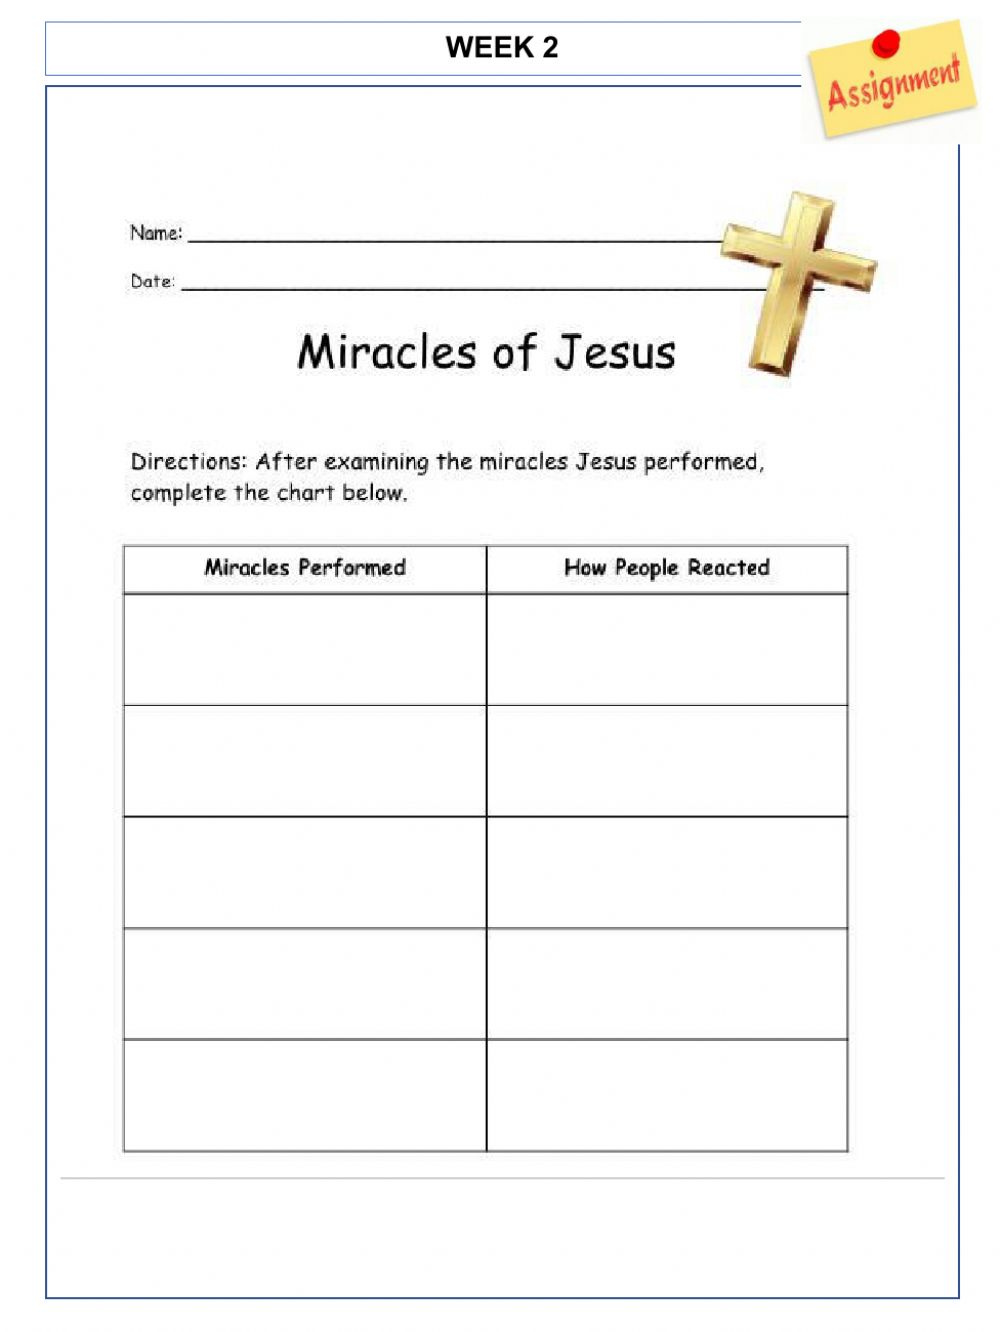 miracles-of-jesus-worksheets-printables-ronald-worksheets